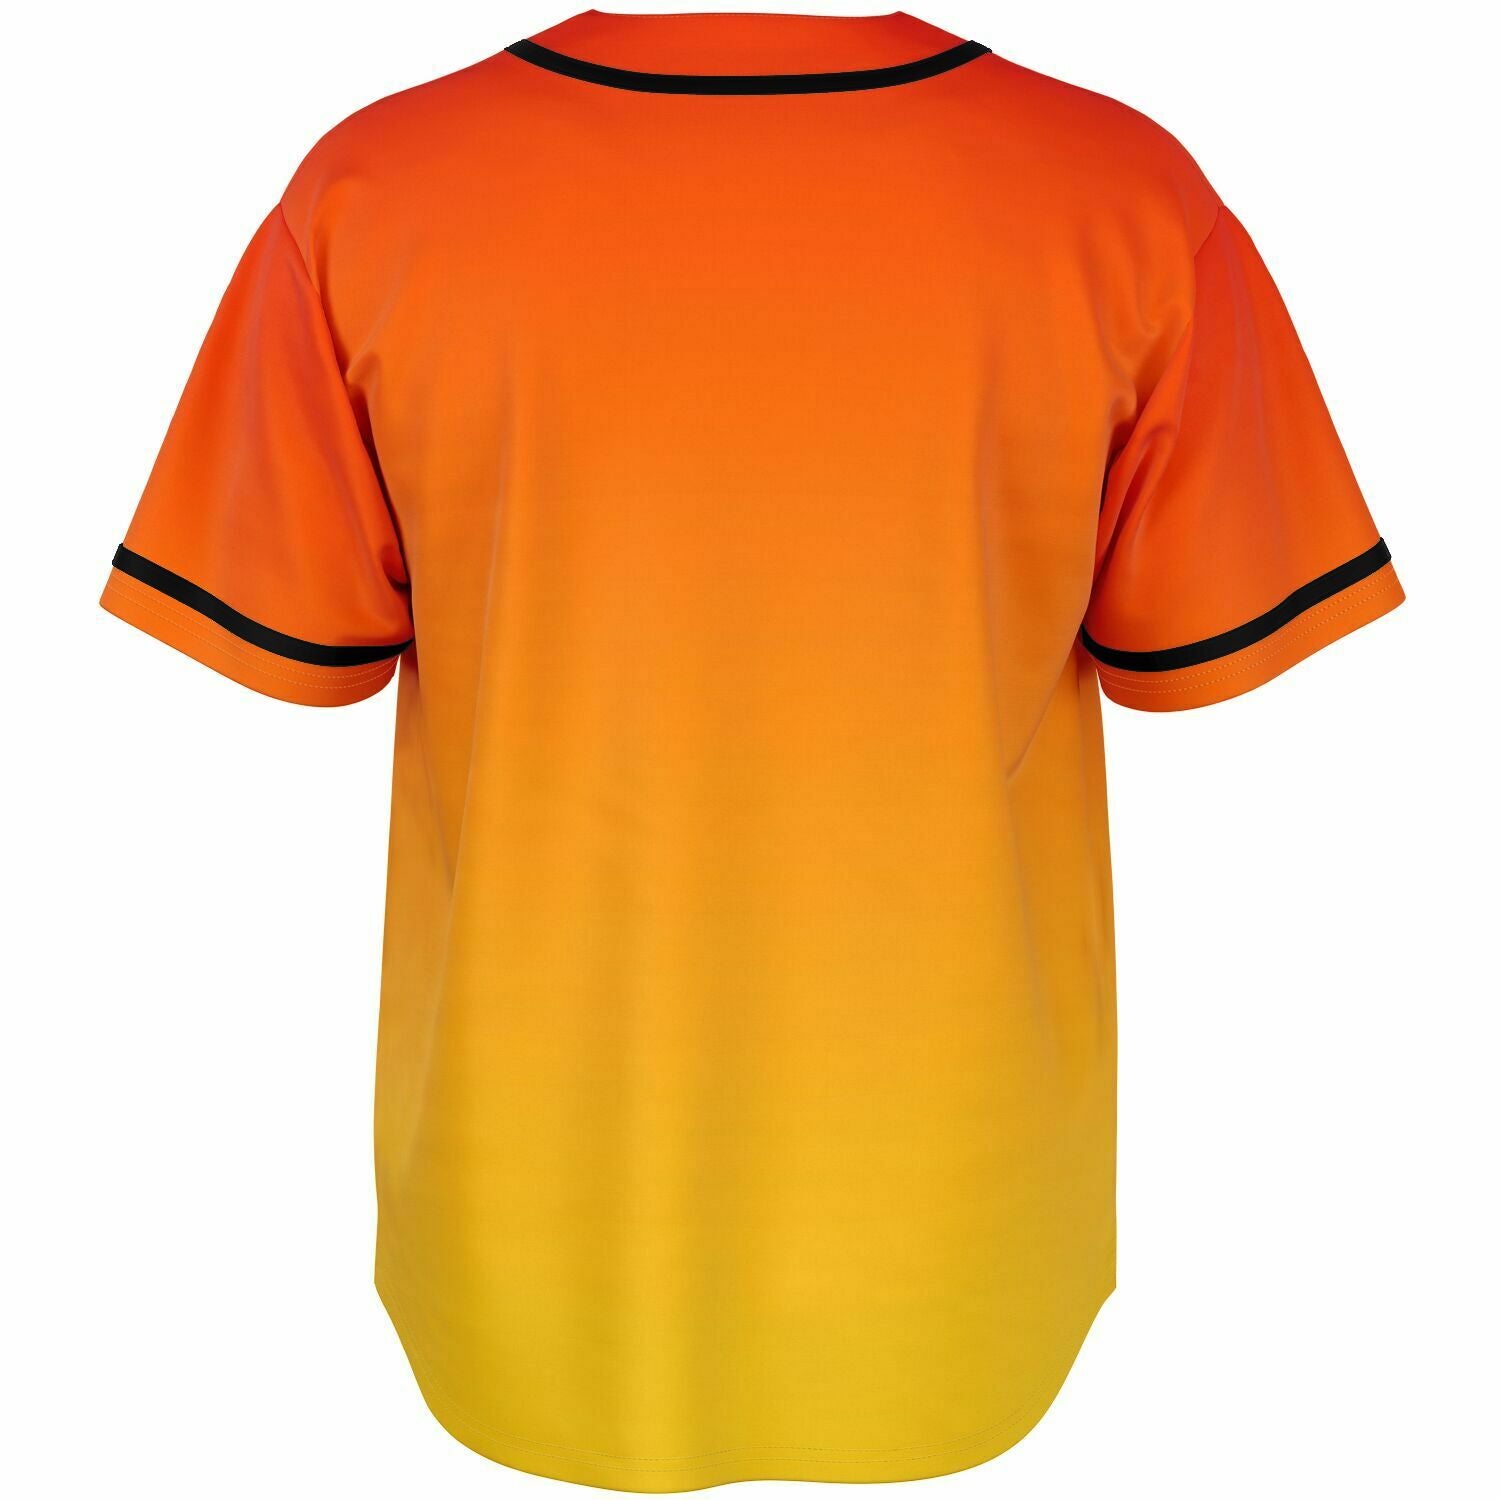 Baseball Jersey - Tangerine Orange and Yellow Ombre fade